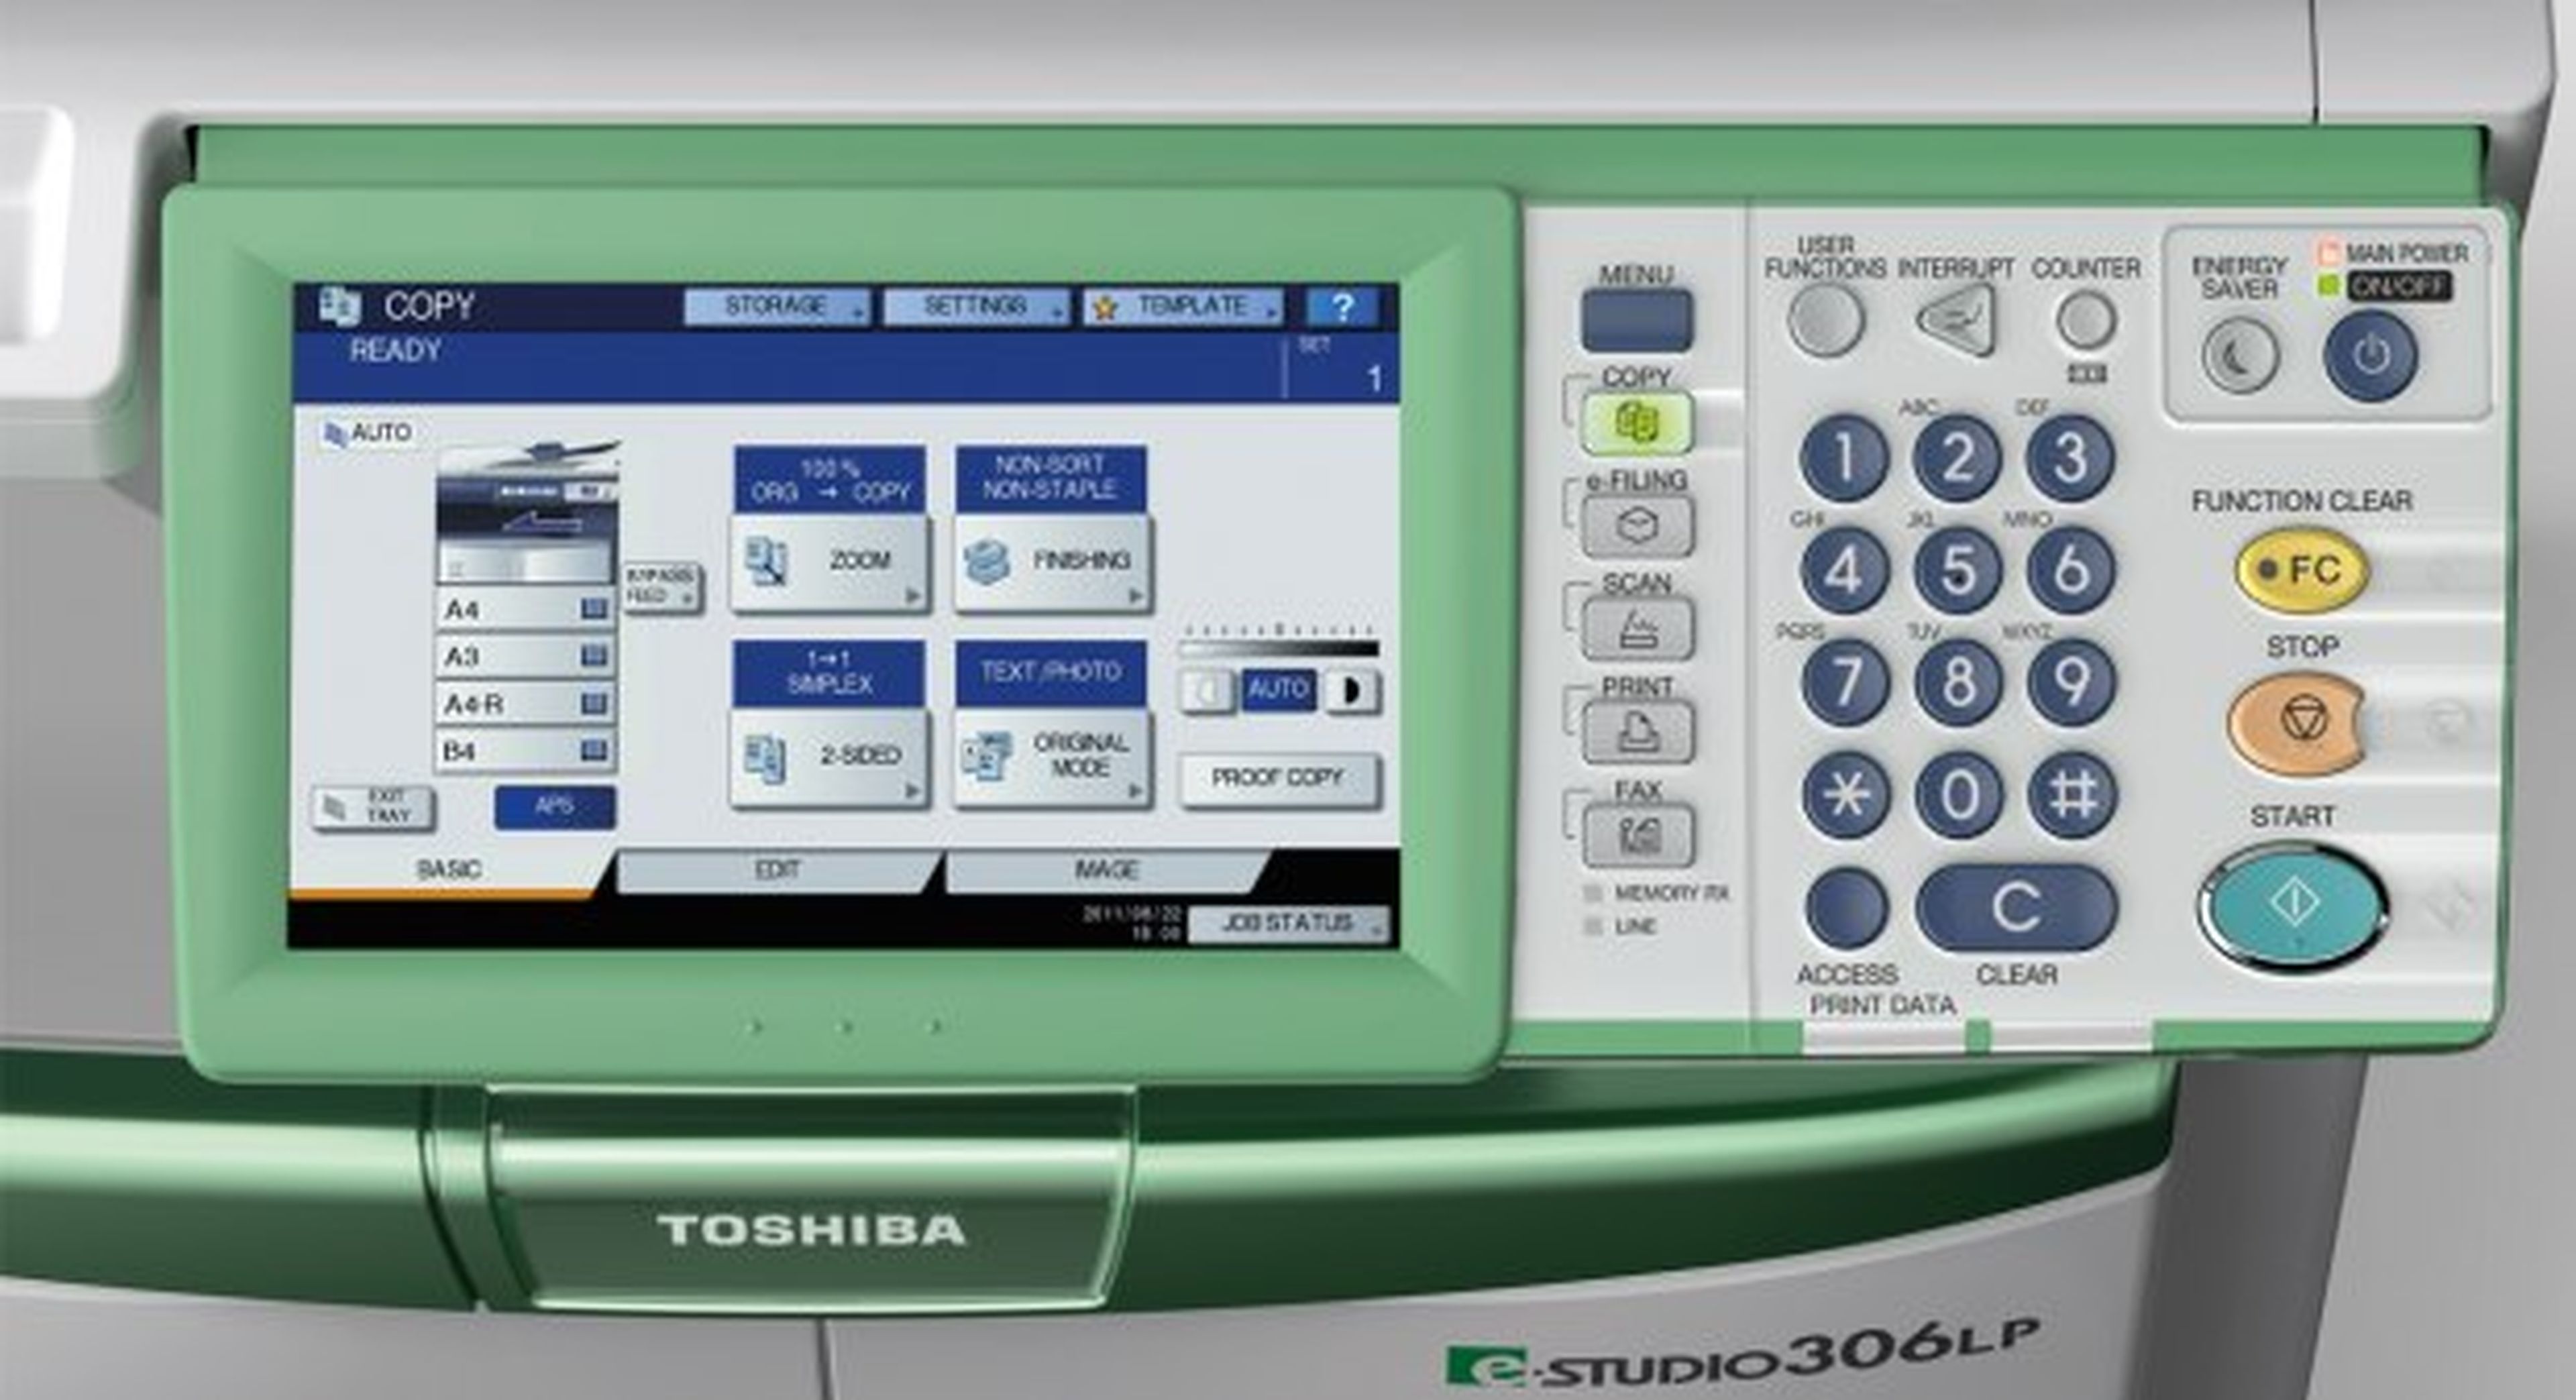 Toshiba e-STUDIO 306LP